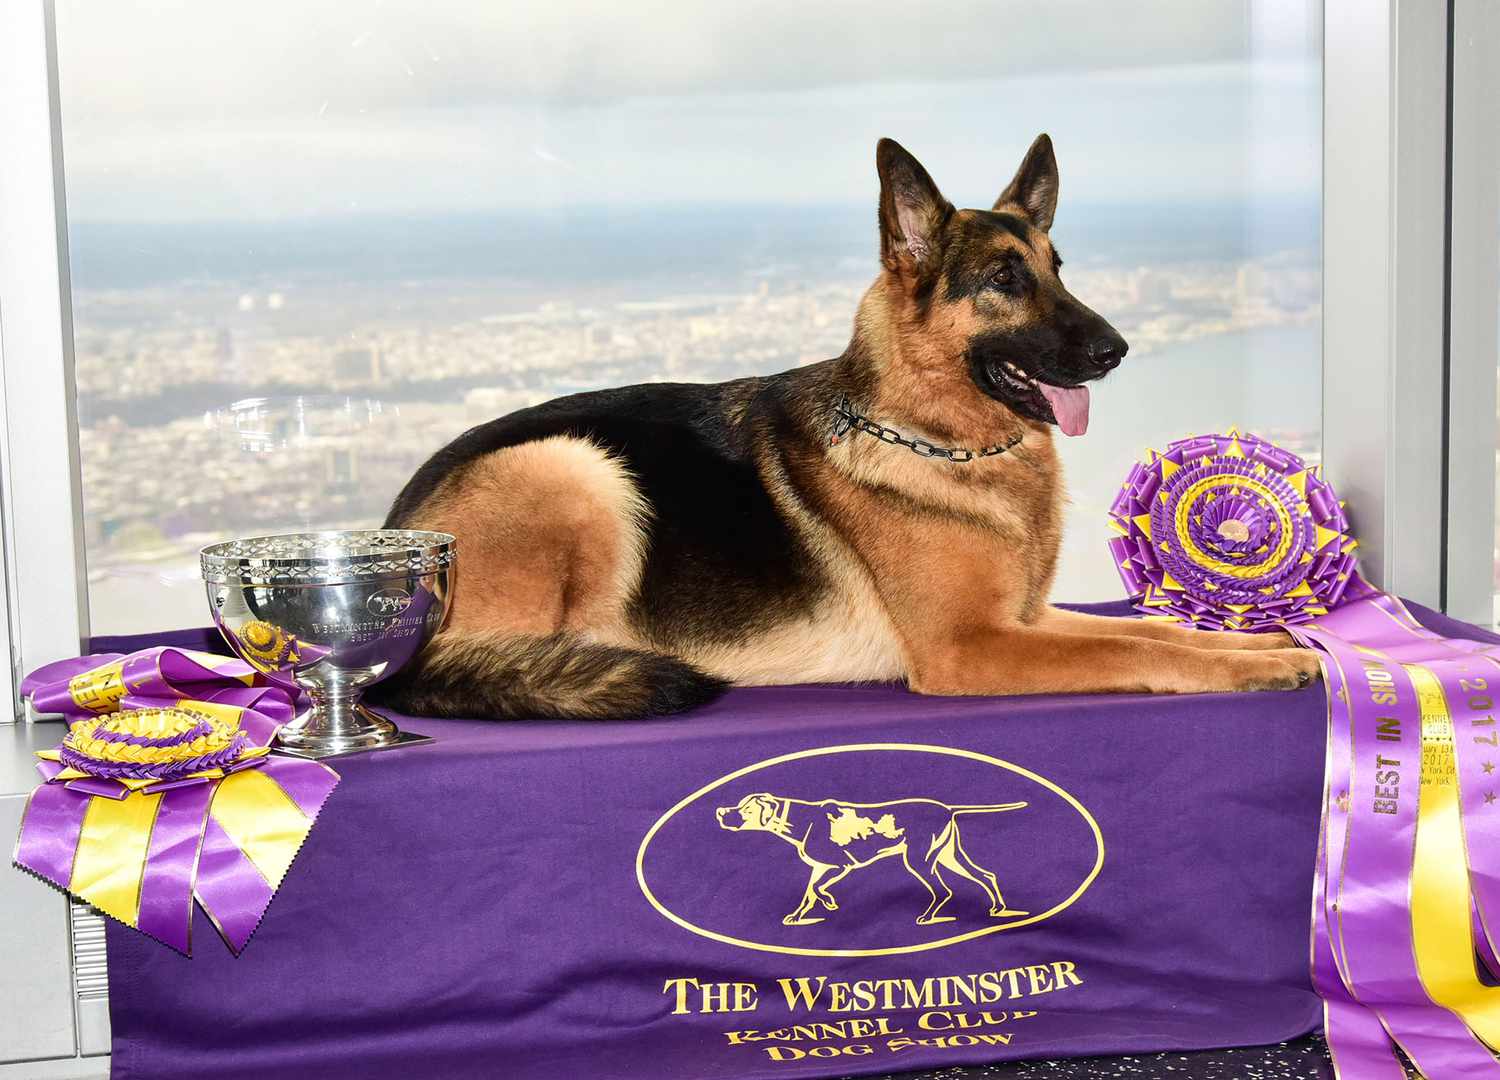 German shepherd Rumor winner of Westminster Dog Show 2017